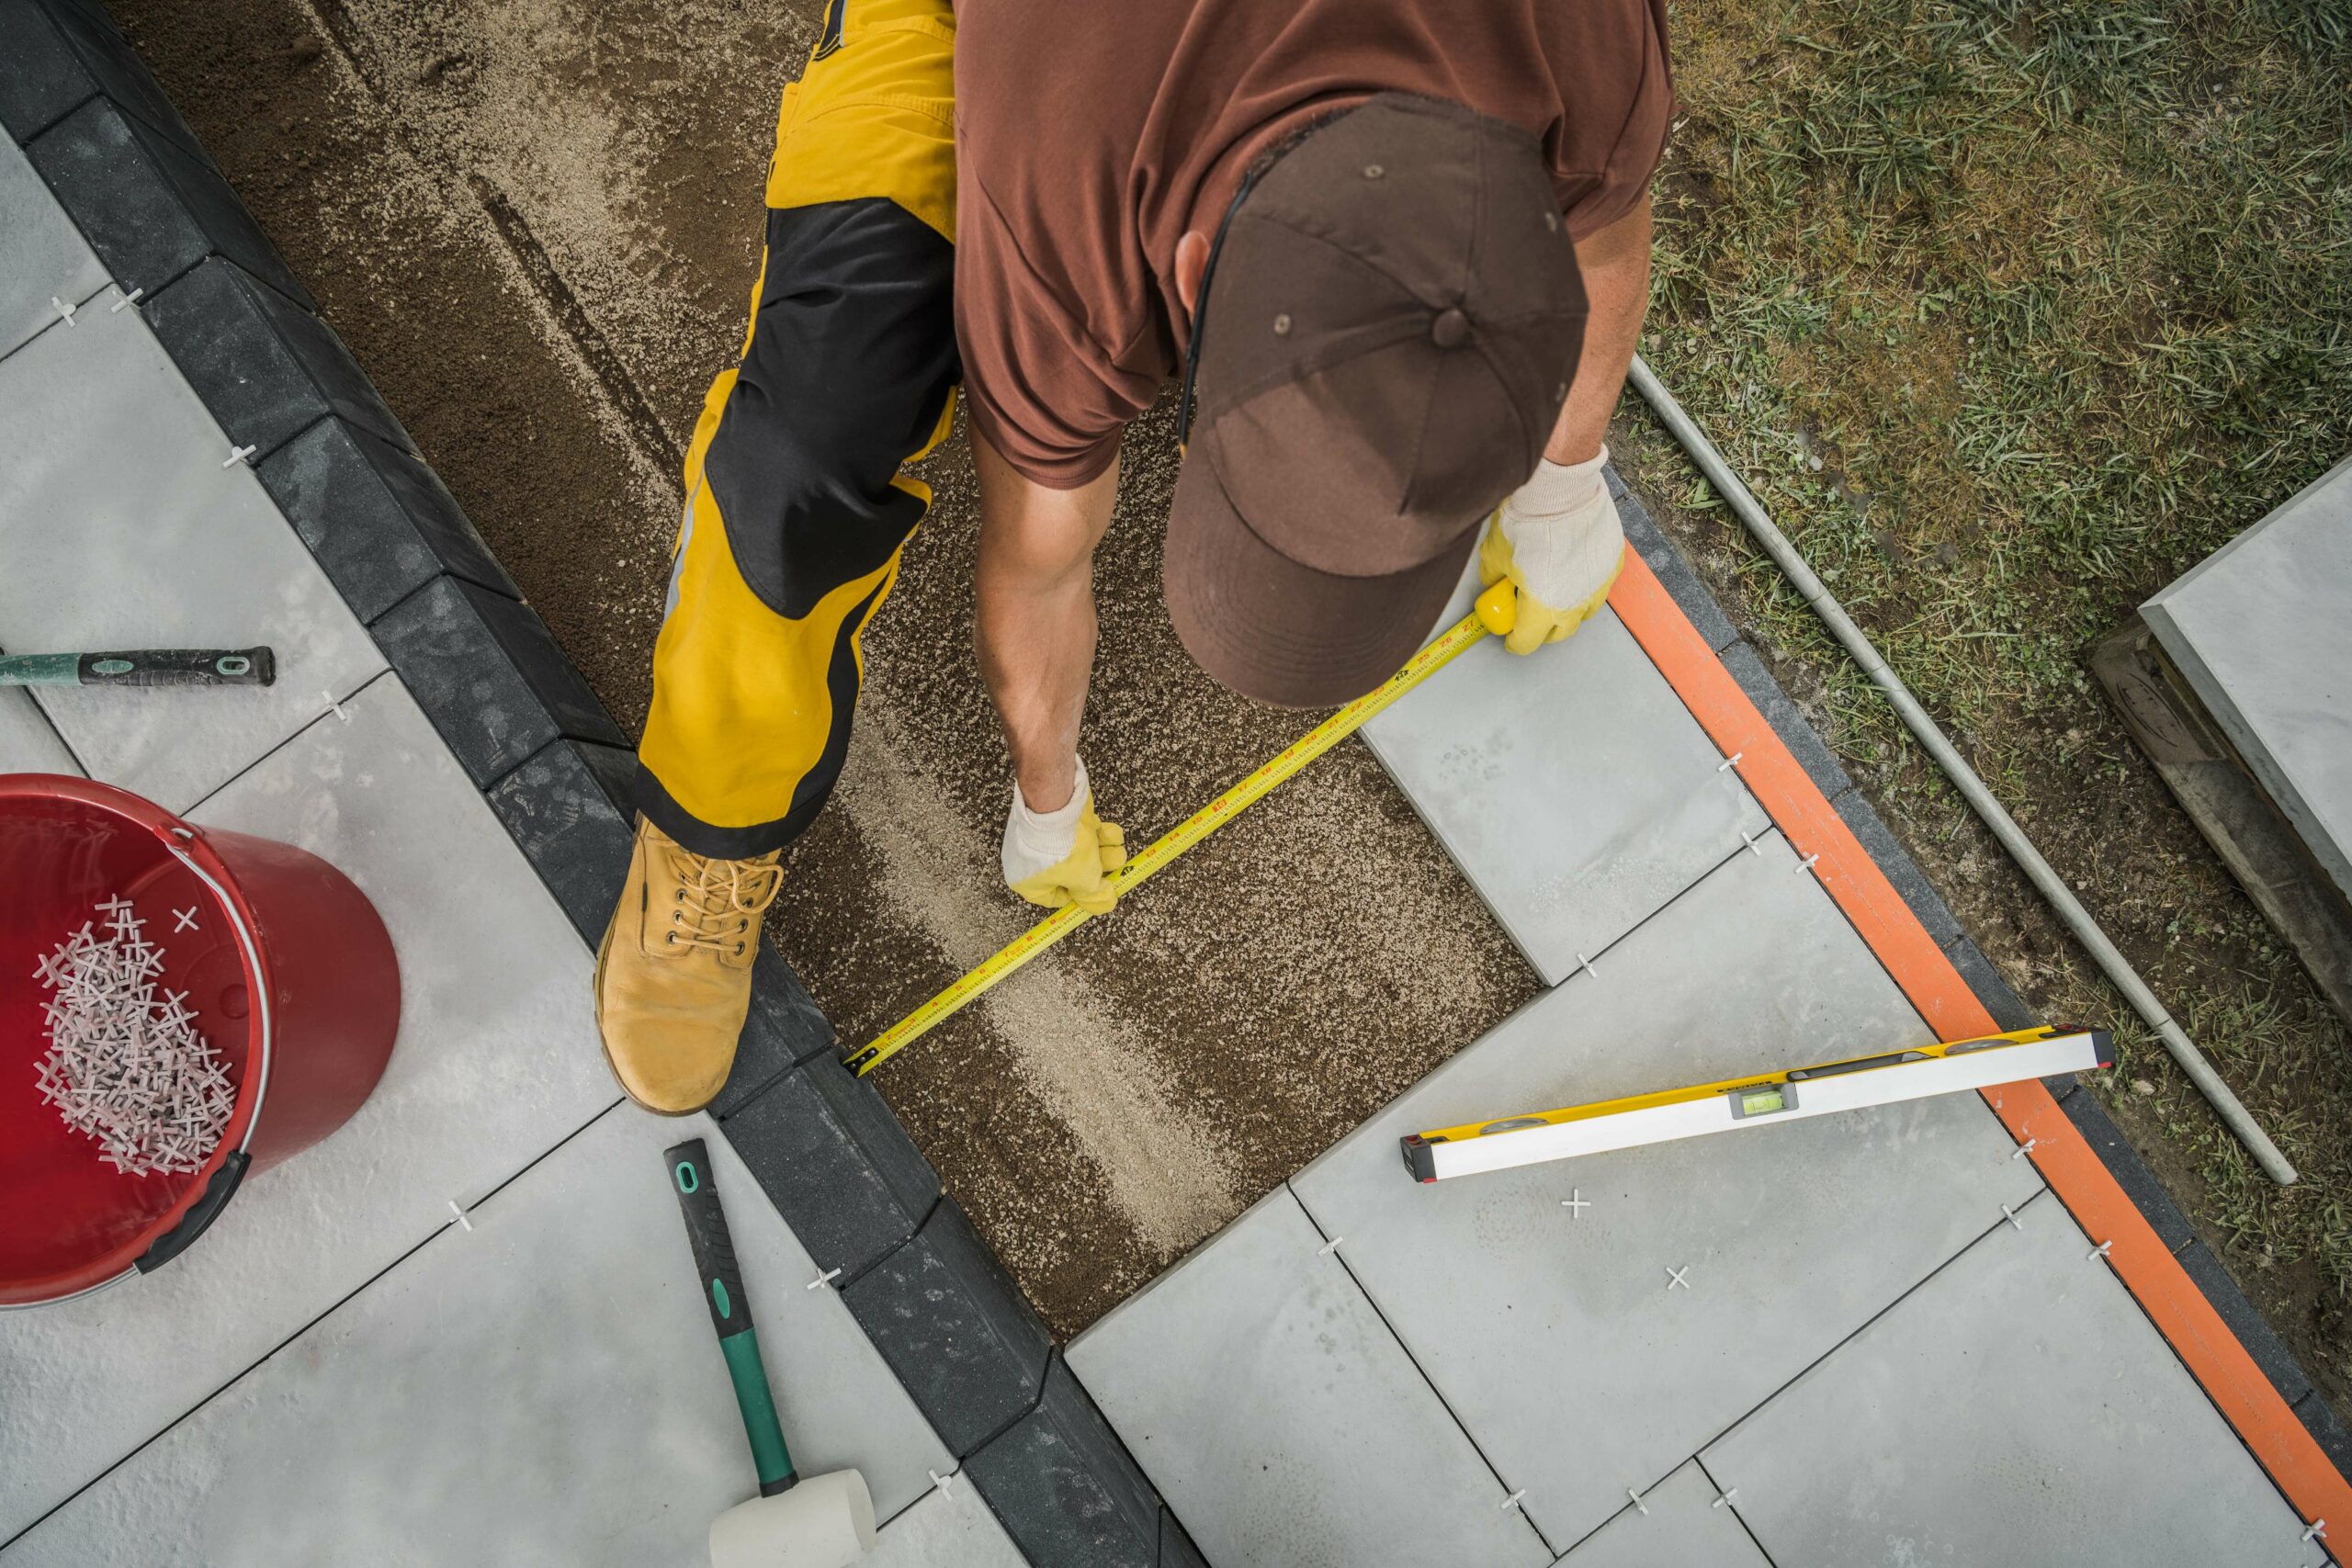 Paver patio contractor measuring the size of concrete blocks